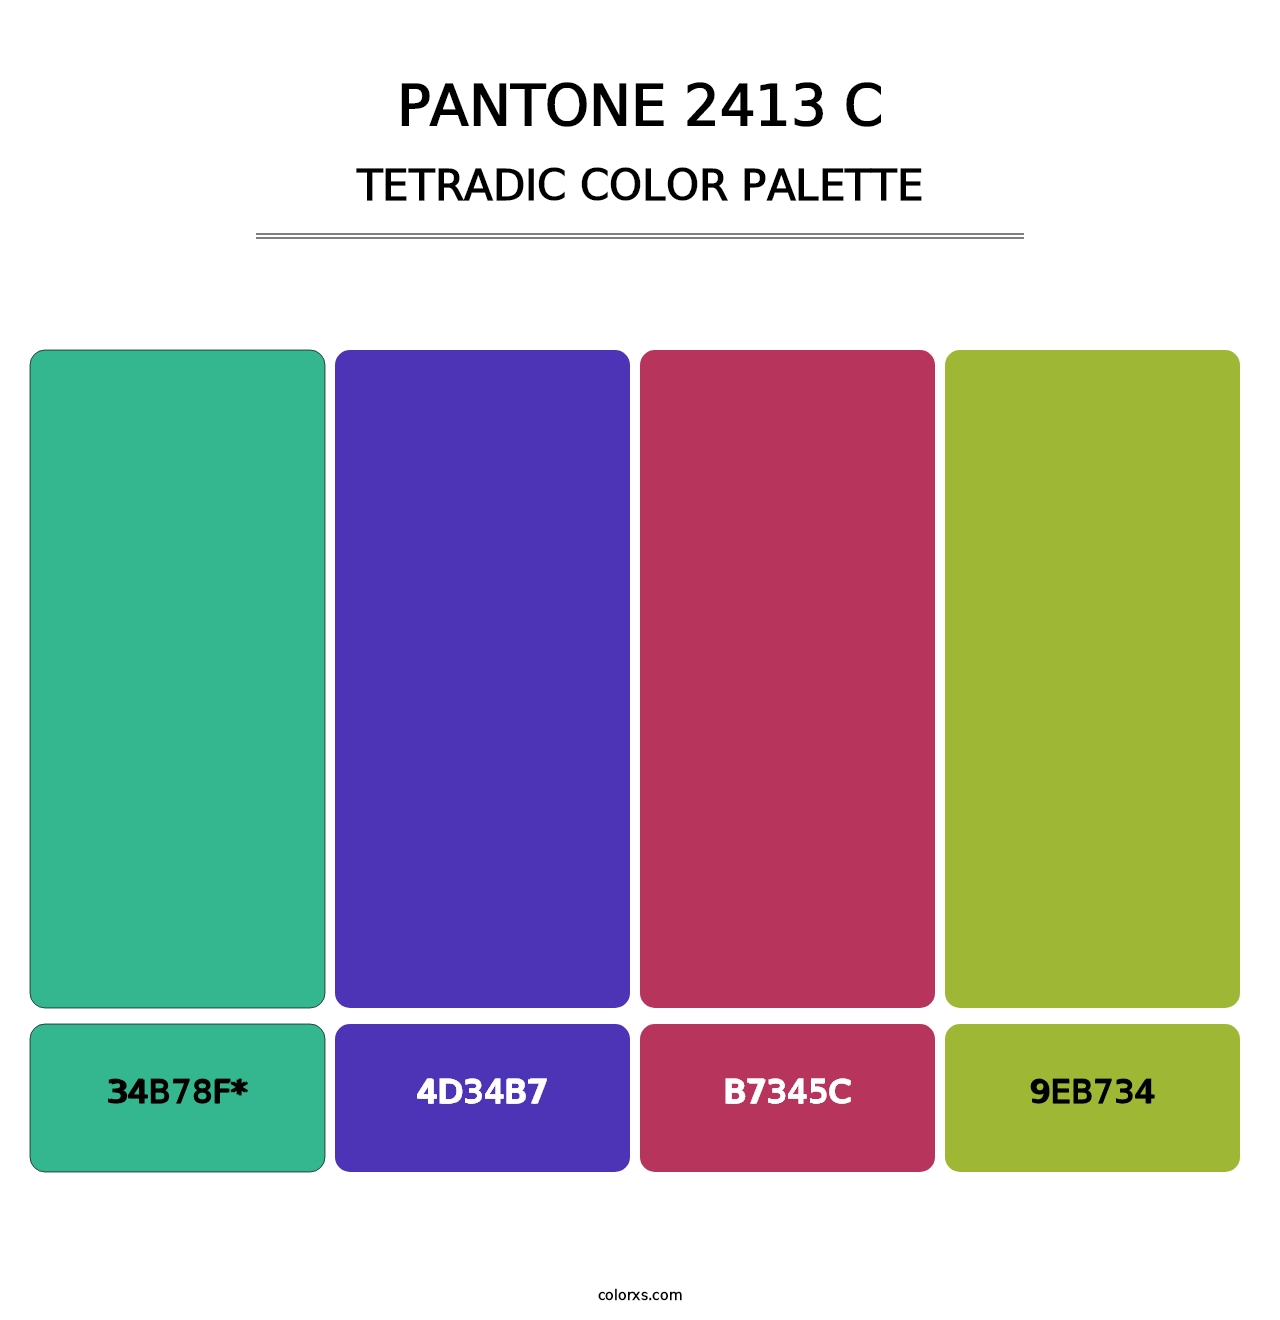 PANTONE 2413 C - Tetradic Color Palette